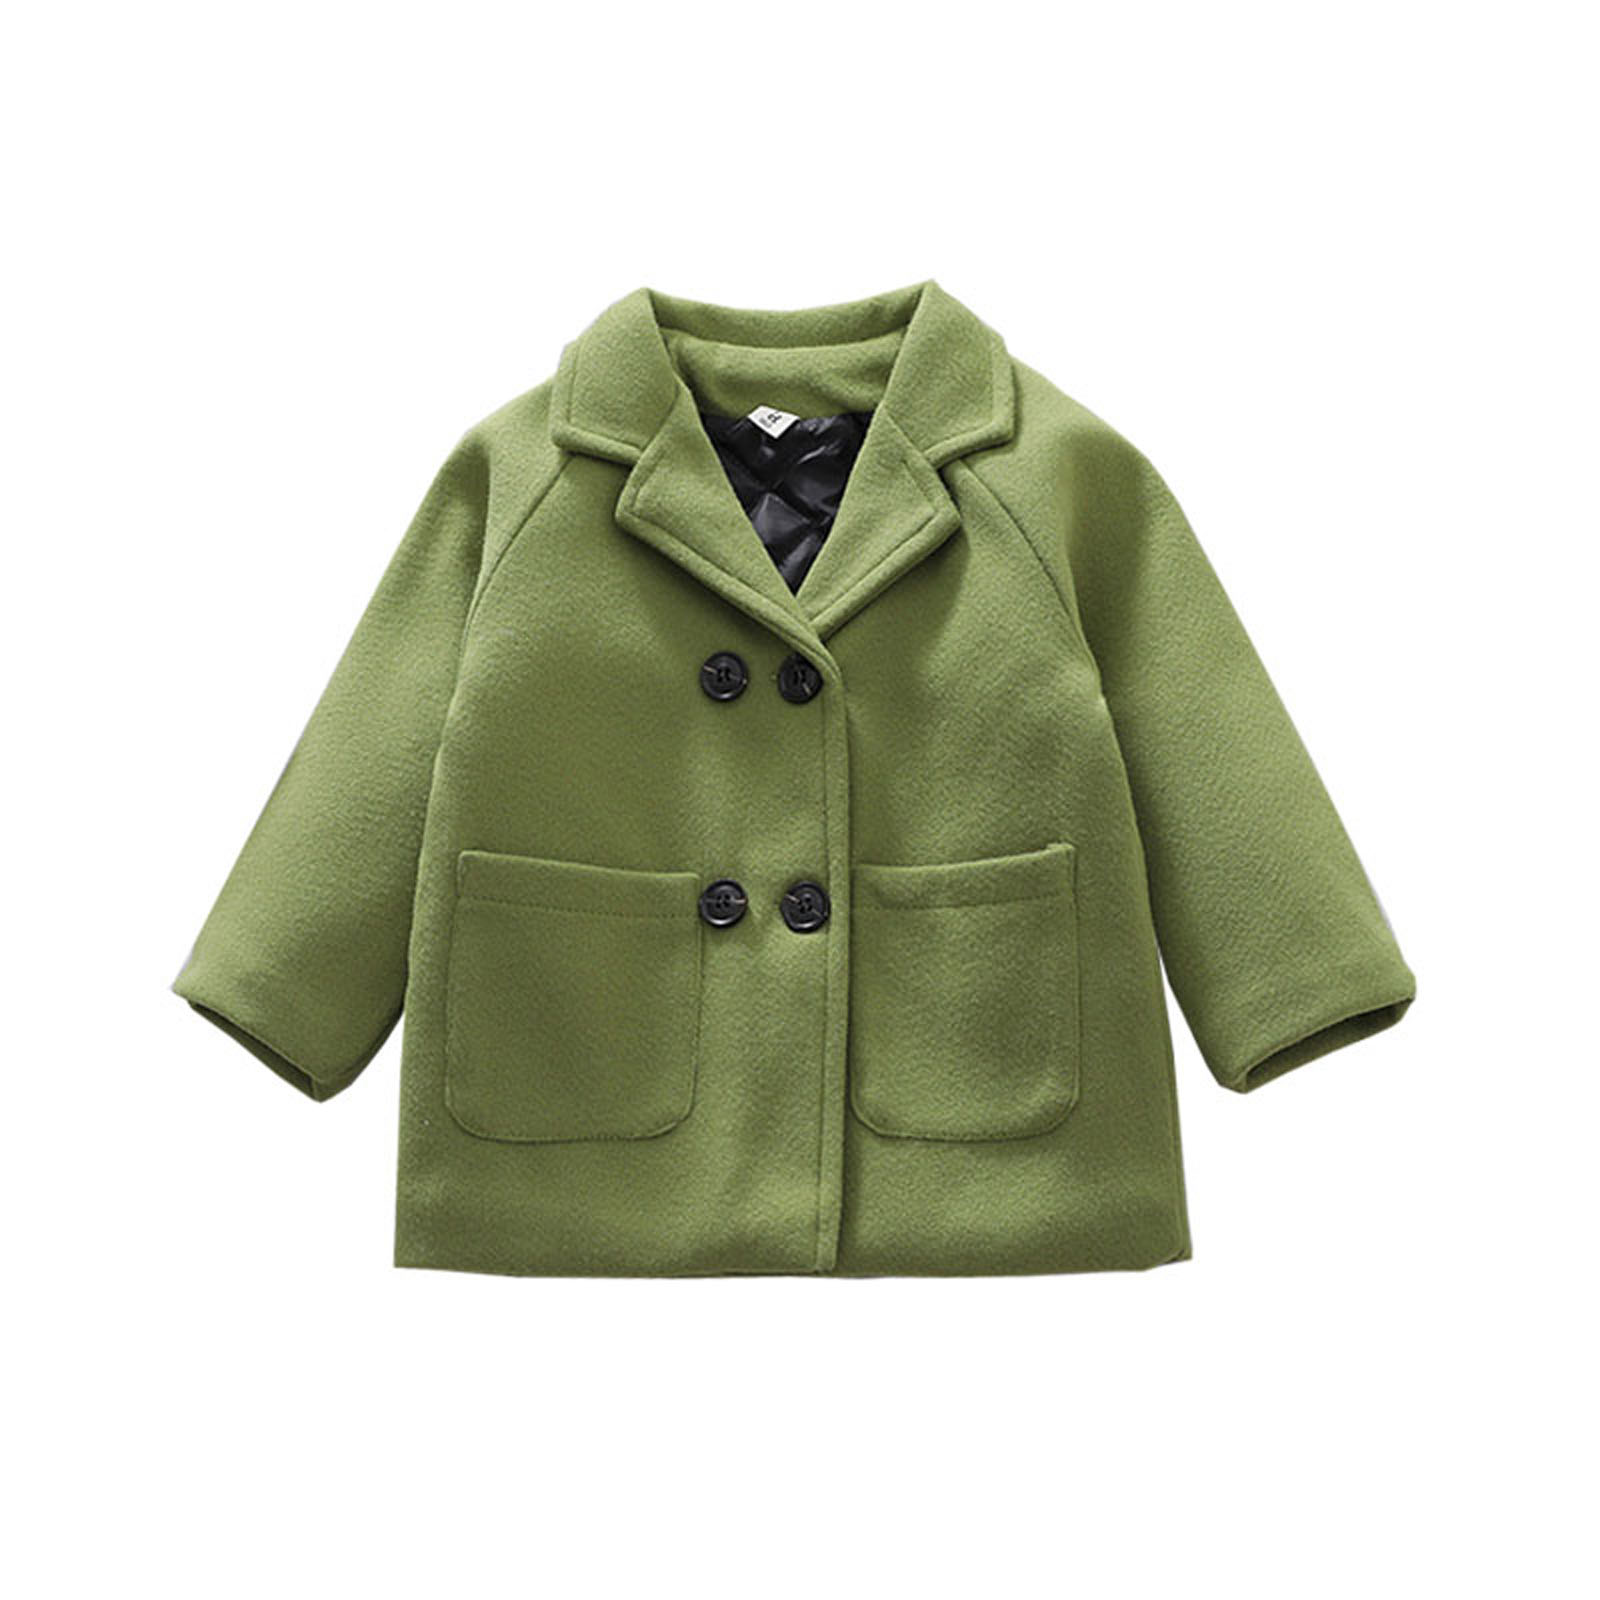 Meihuid Baby Boys Girls Wool Coat Winter Warm Double Breasted Trench Coat Jacket Outwear - image 1 of 6